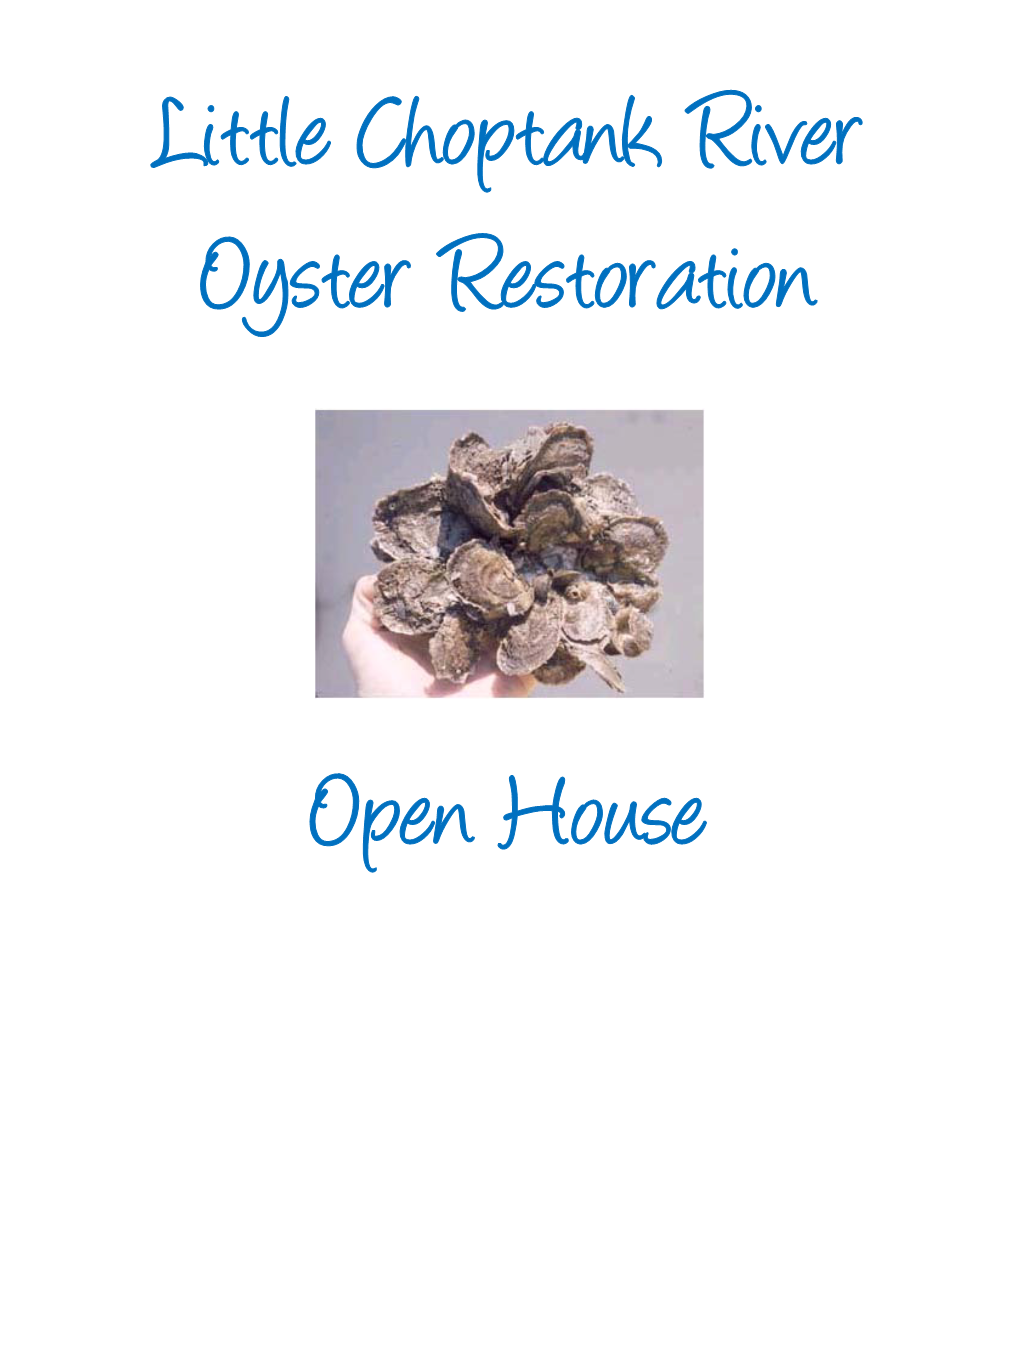 Harris Creek Oyster Restoration Open House